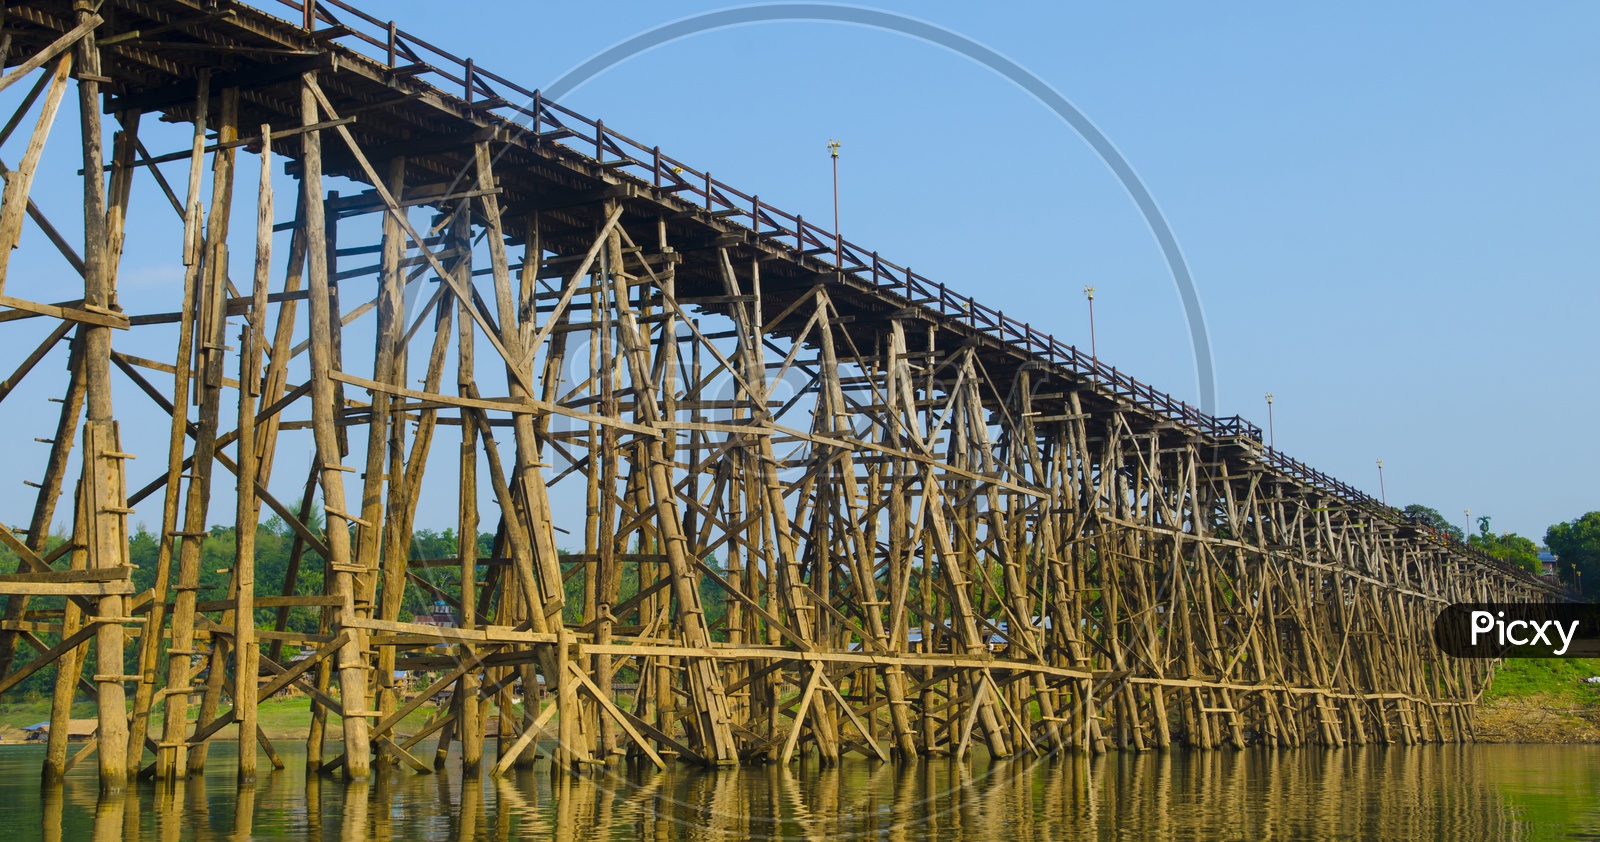 Mon Bridge in Sangkhla Buri Built With Wooden Logs